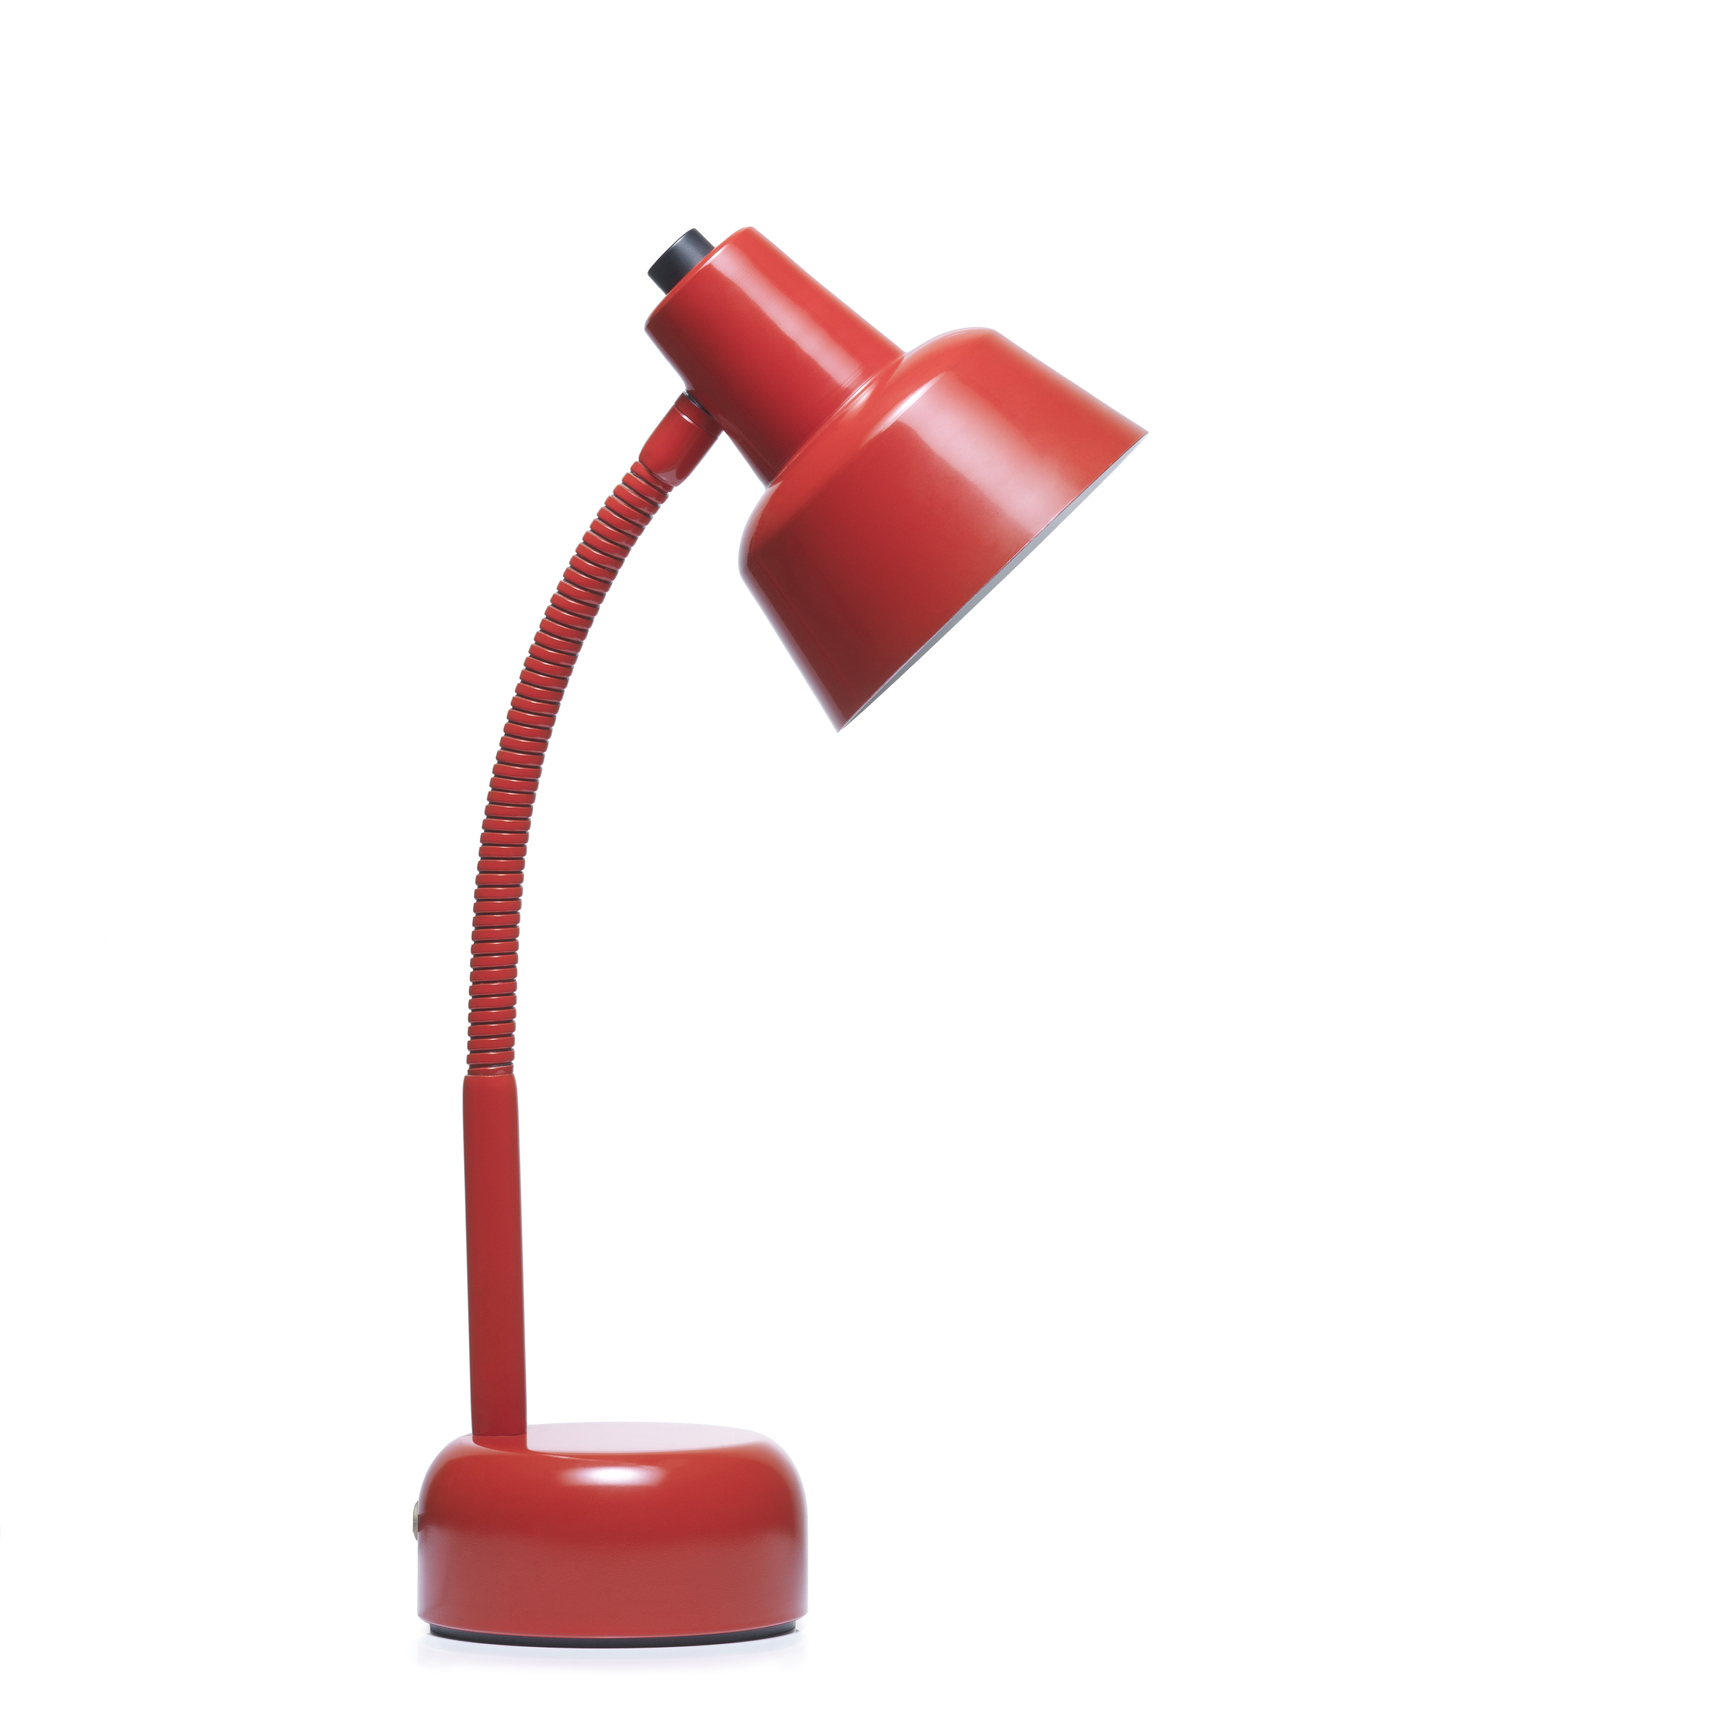 Red desk lamp on white background